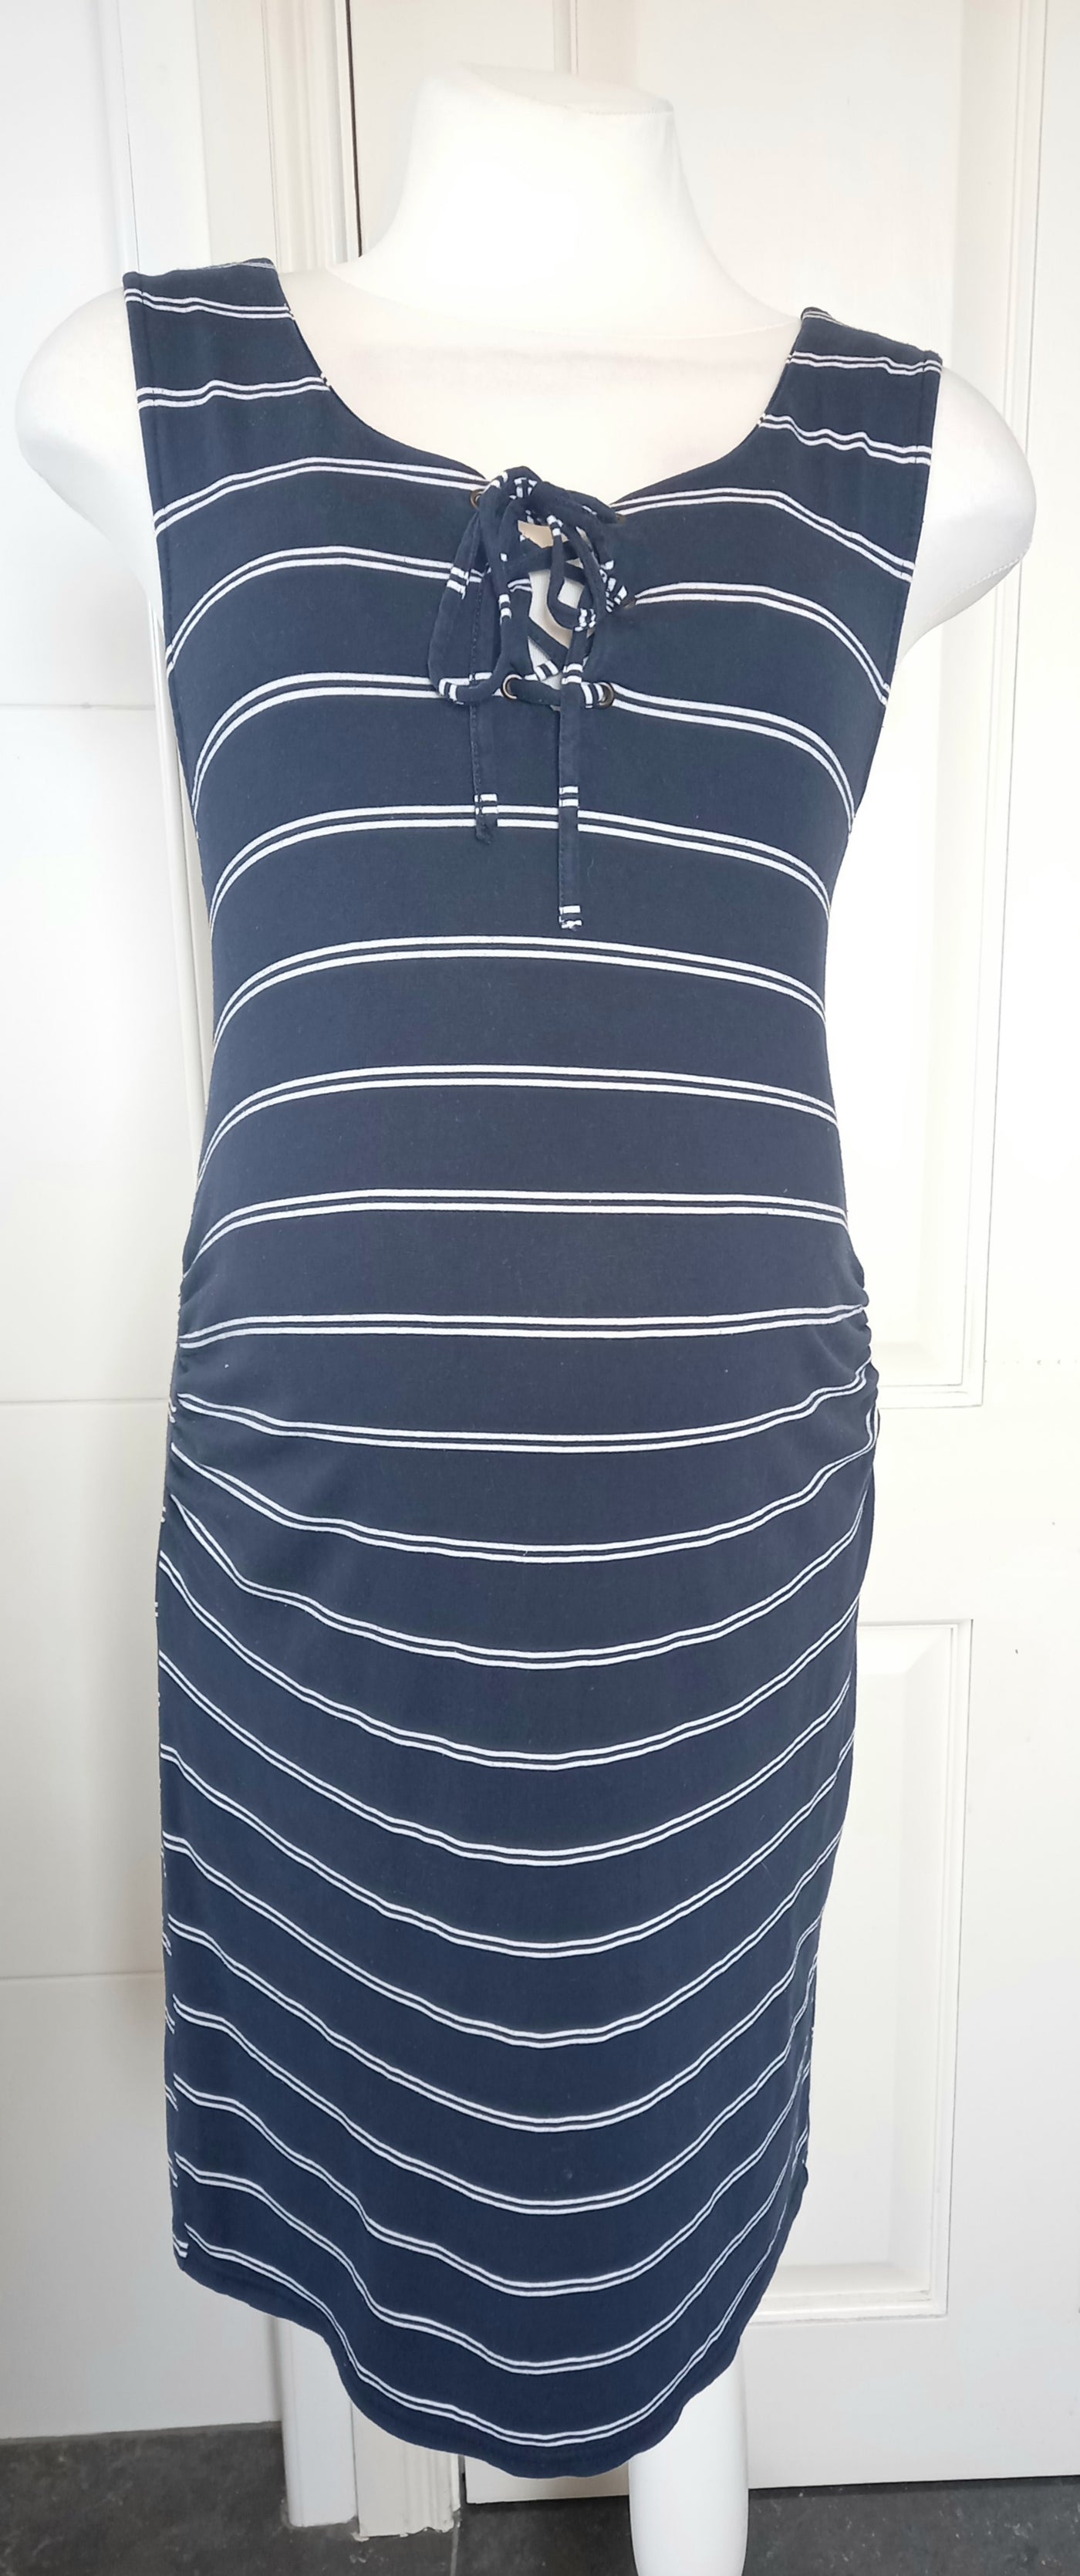 New Look Maternity Navy & White Stripe Sleeveless Dress - Size 16 (more like 12/14)